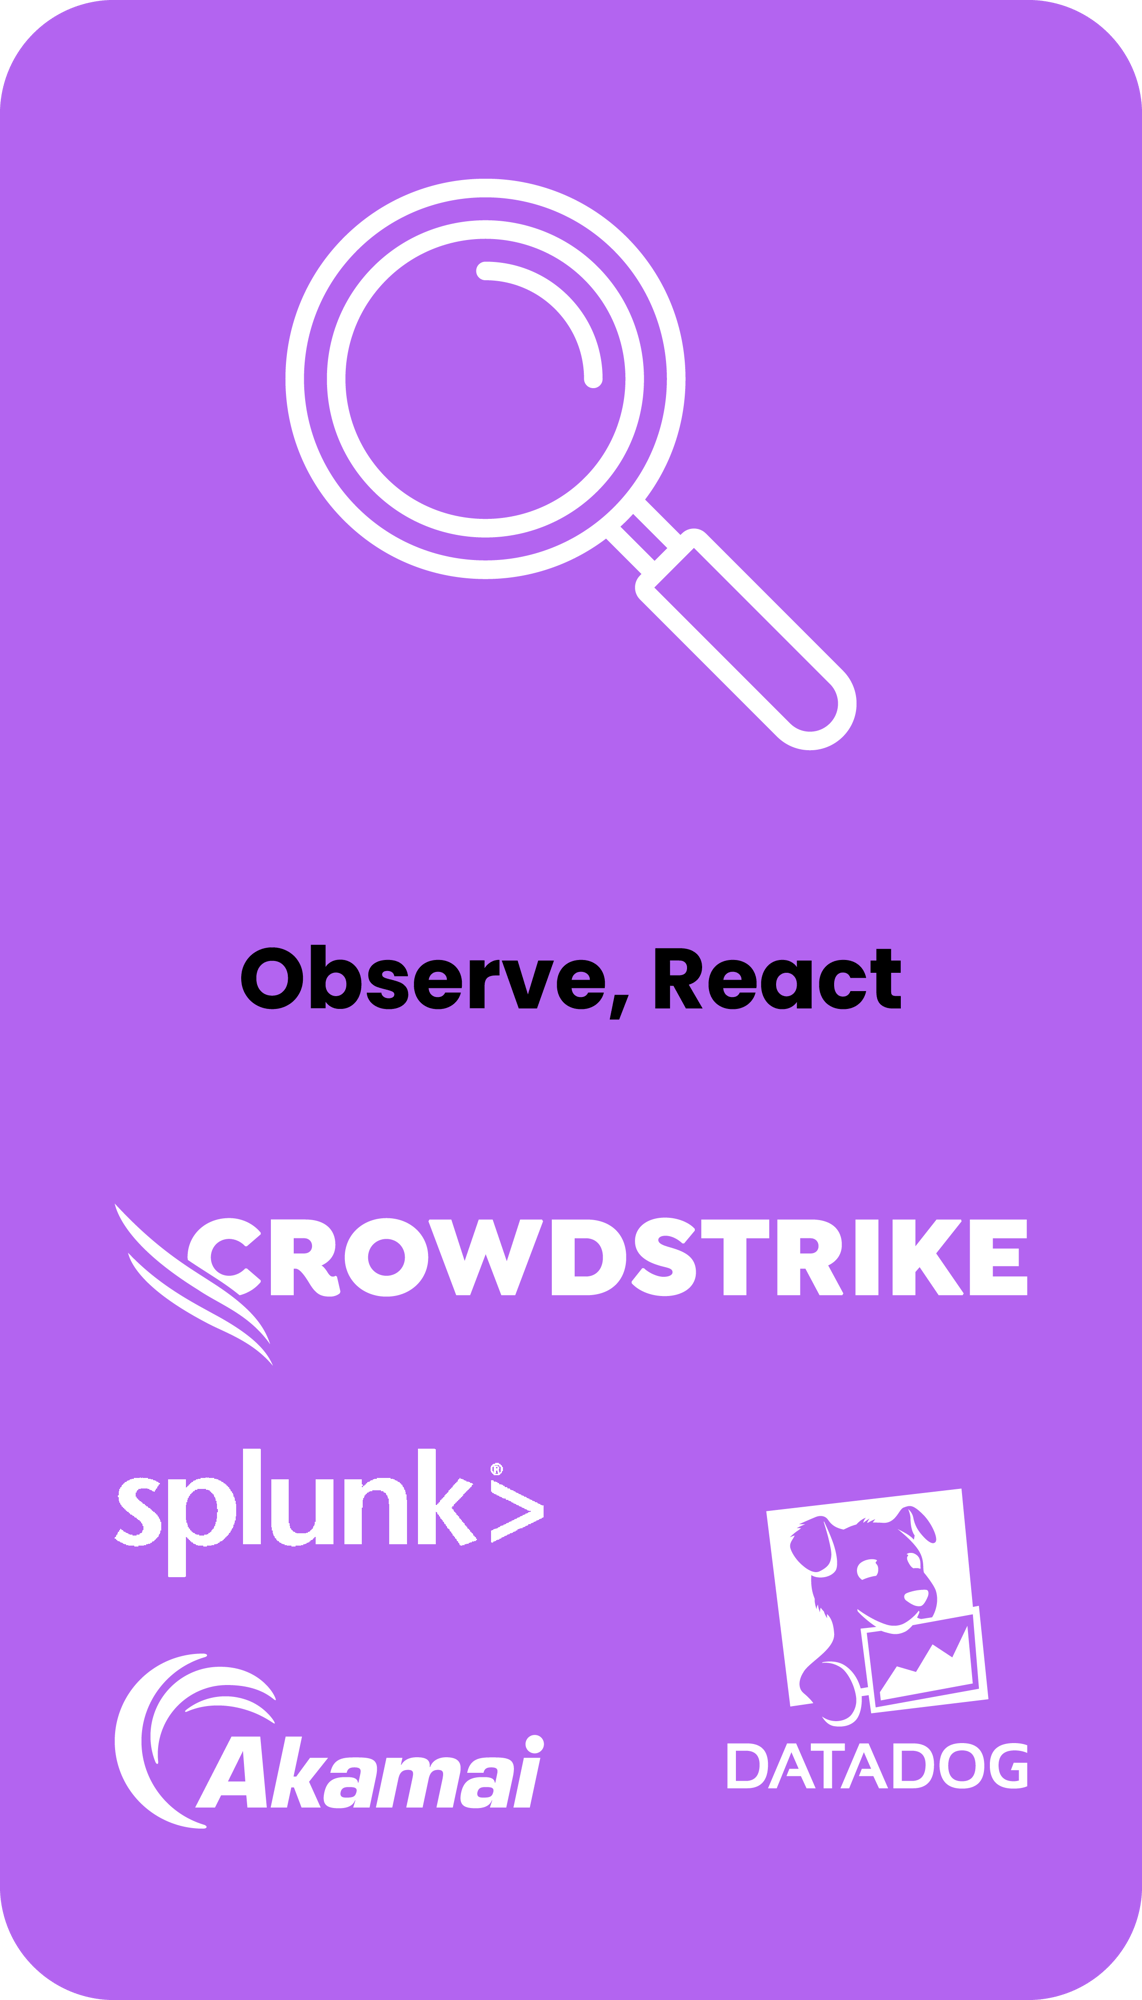 Observe, React. Technologies include Akamai, Splunk, CrowdStrike, and Datadog.